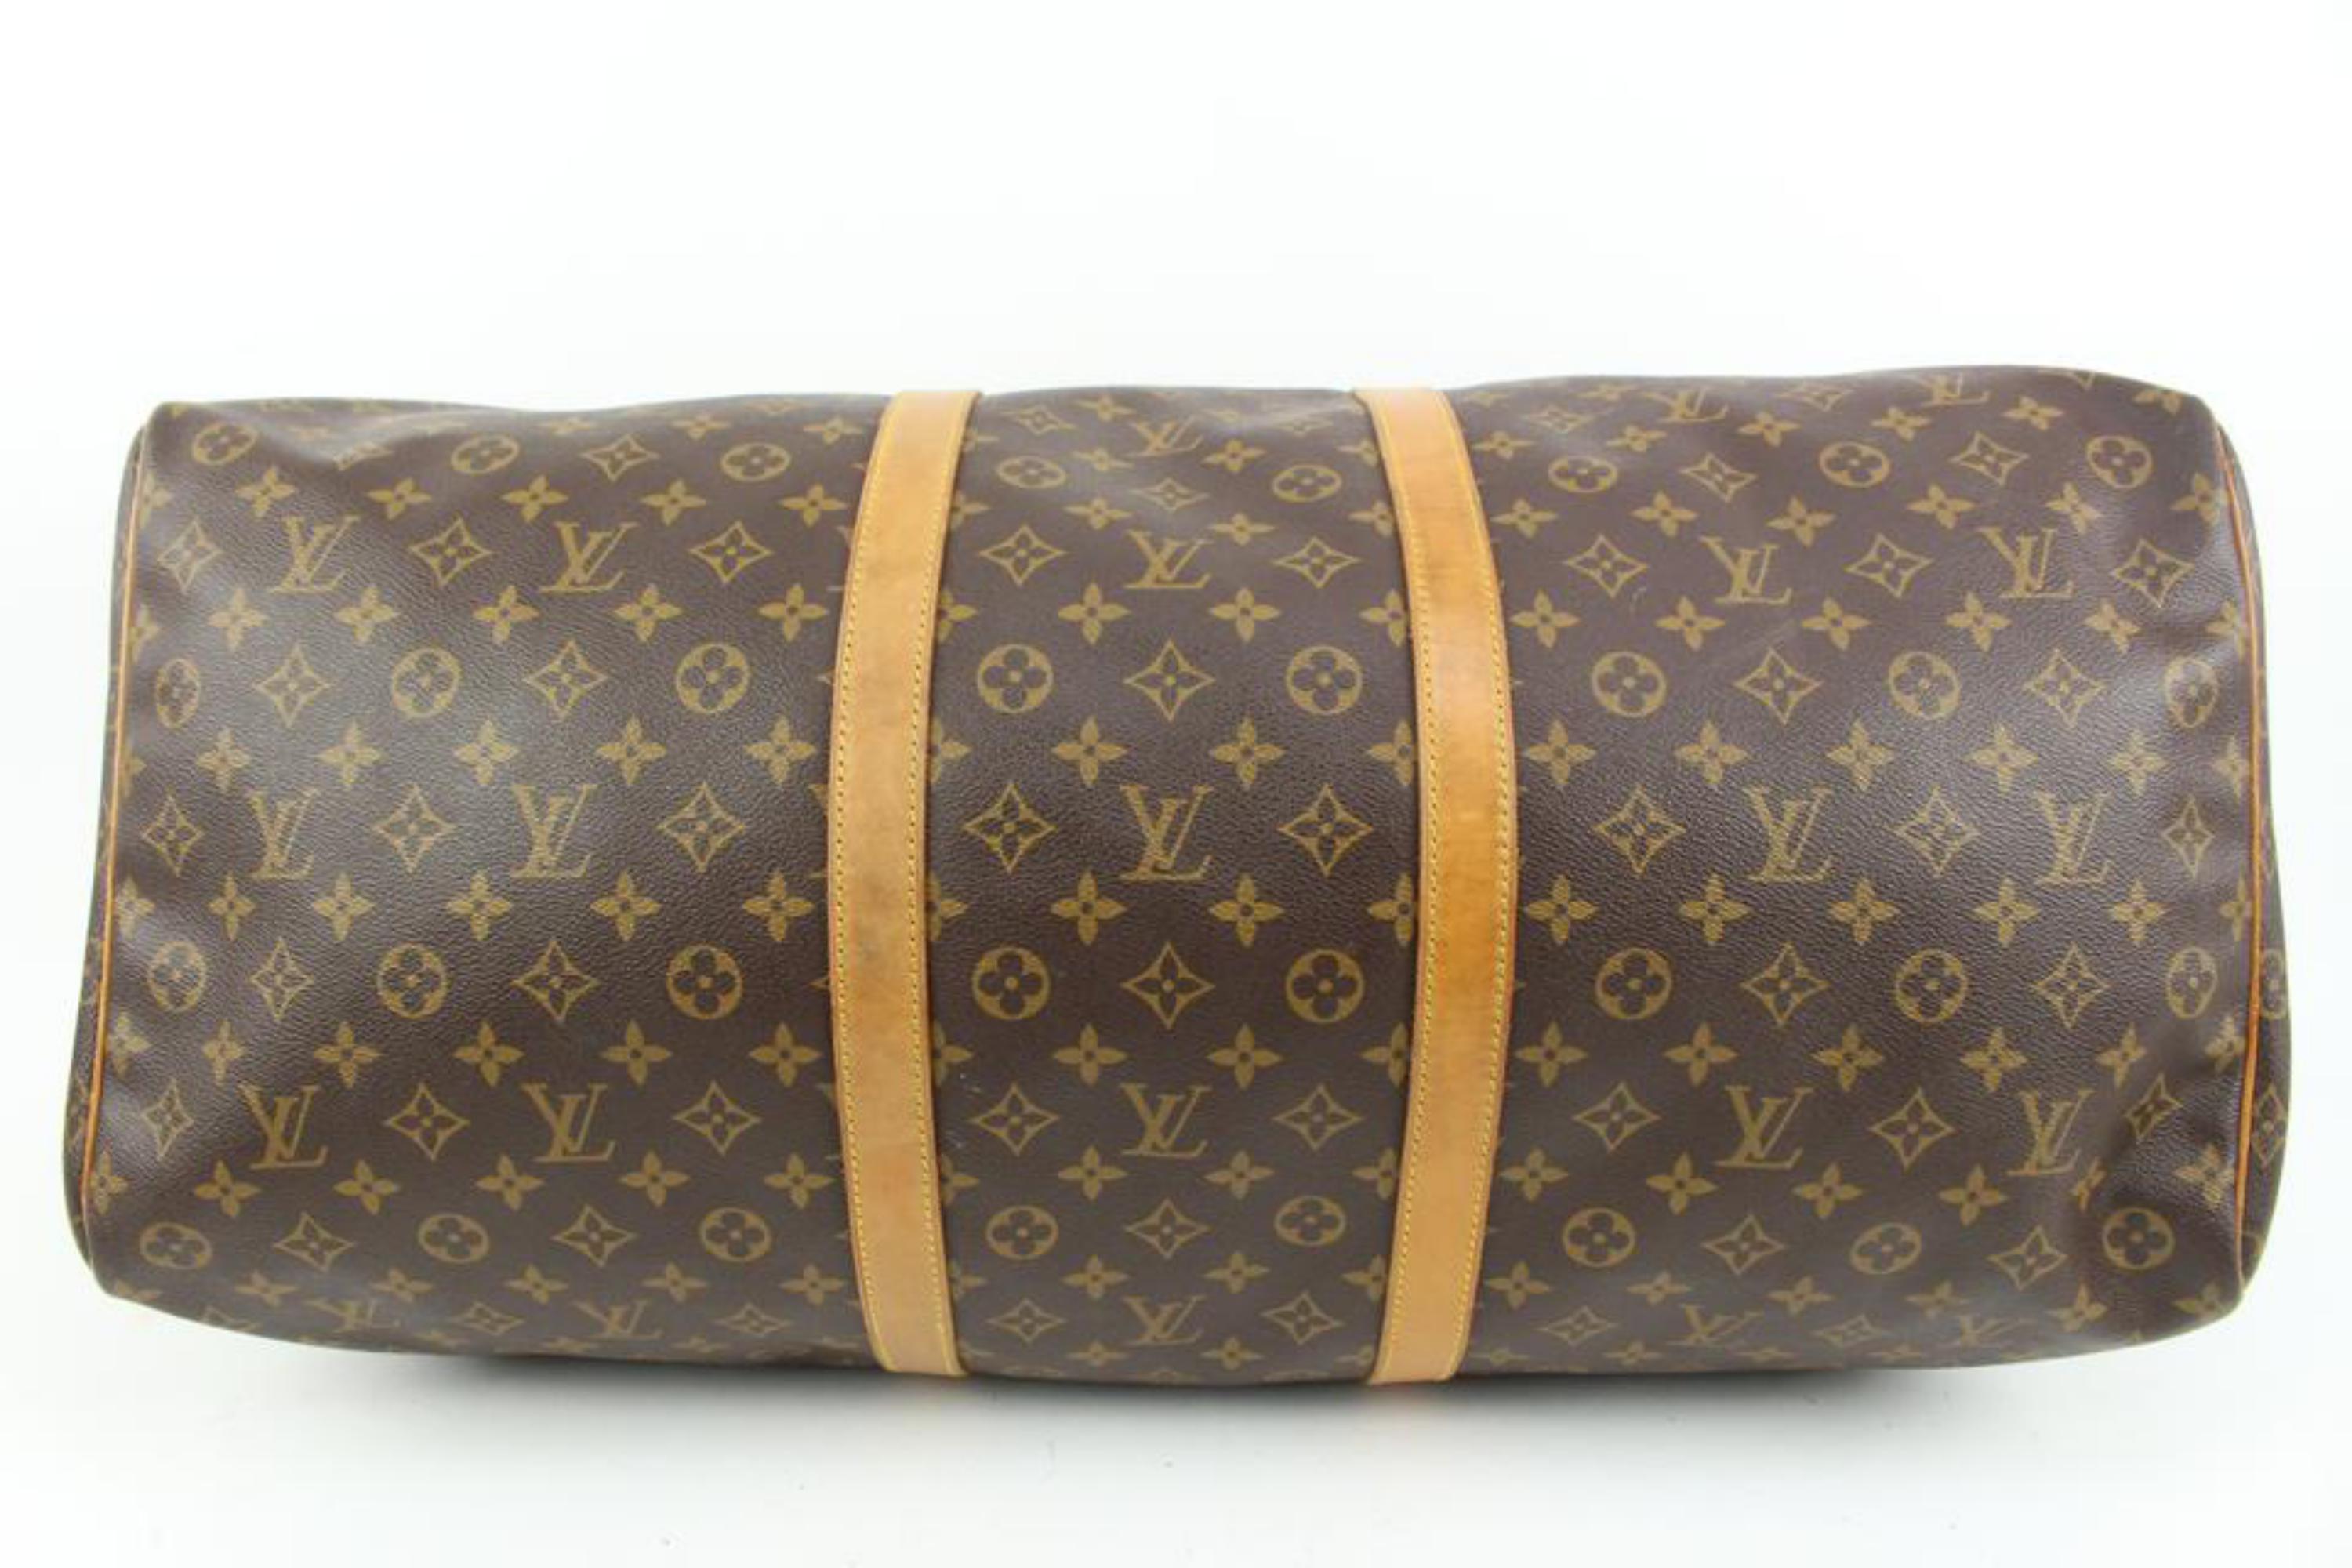 Louis Vuitton Large Monogram Keepall 60 Boston Duffle Bag 5lz425s 4